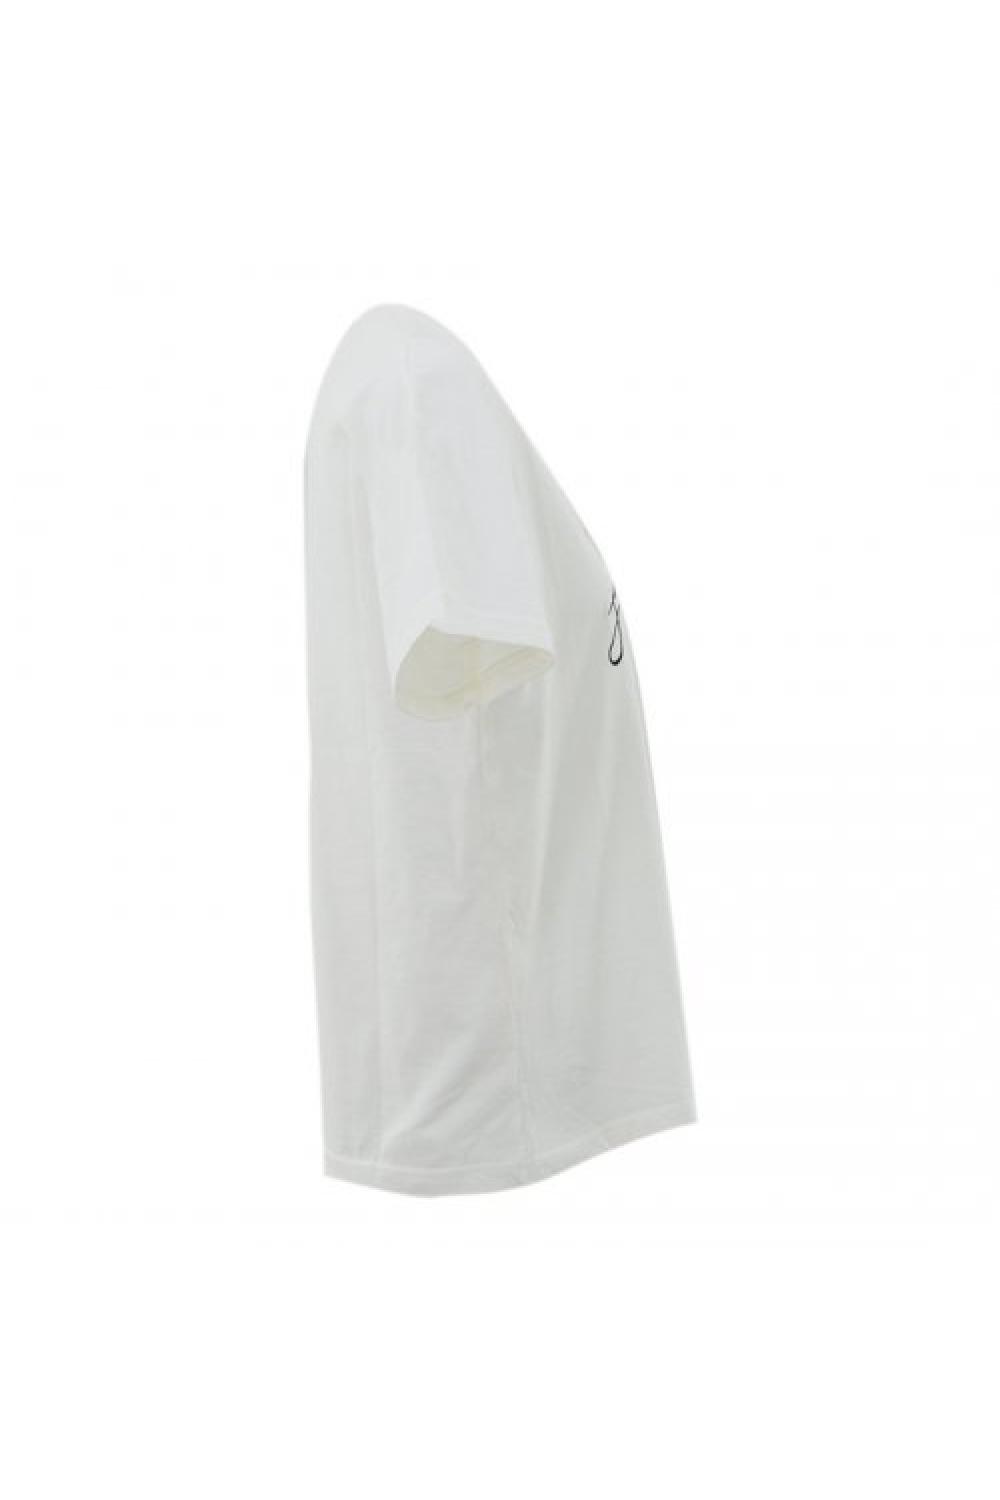 STAFF T-shirt Tessa Women - White (63-013.047-N0010)